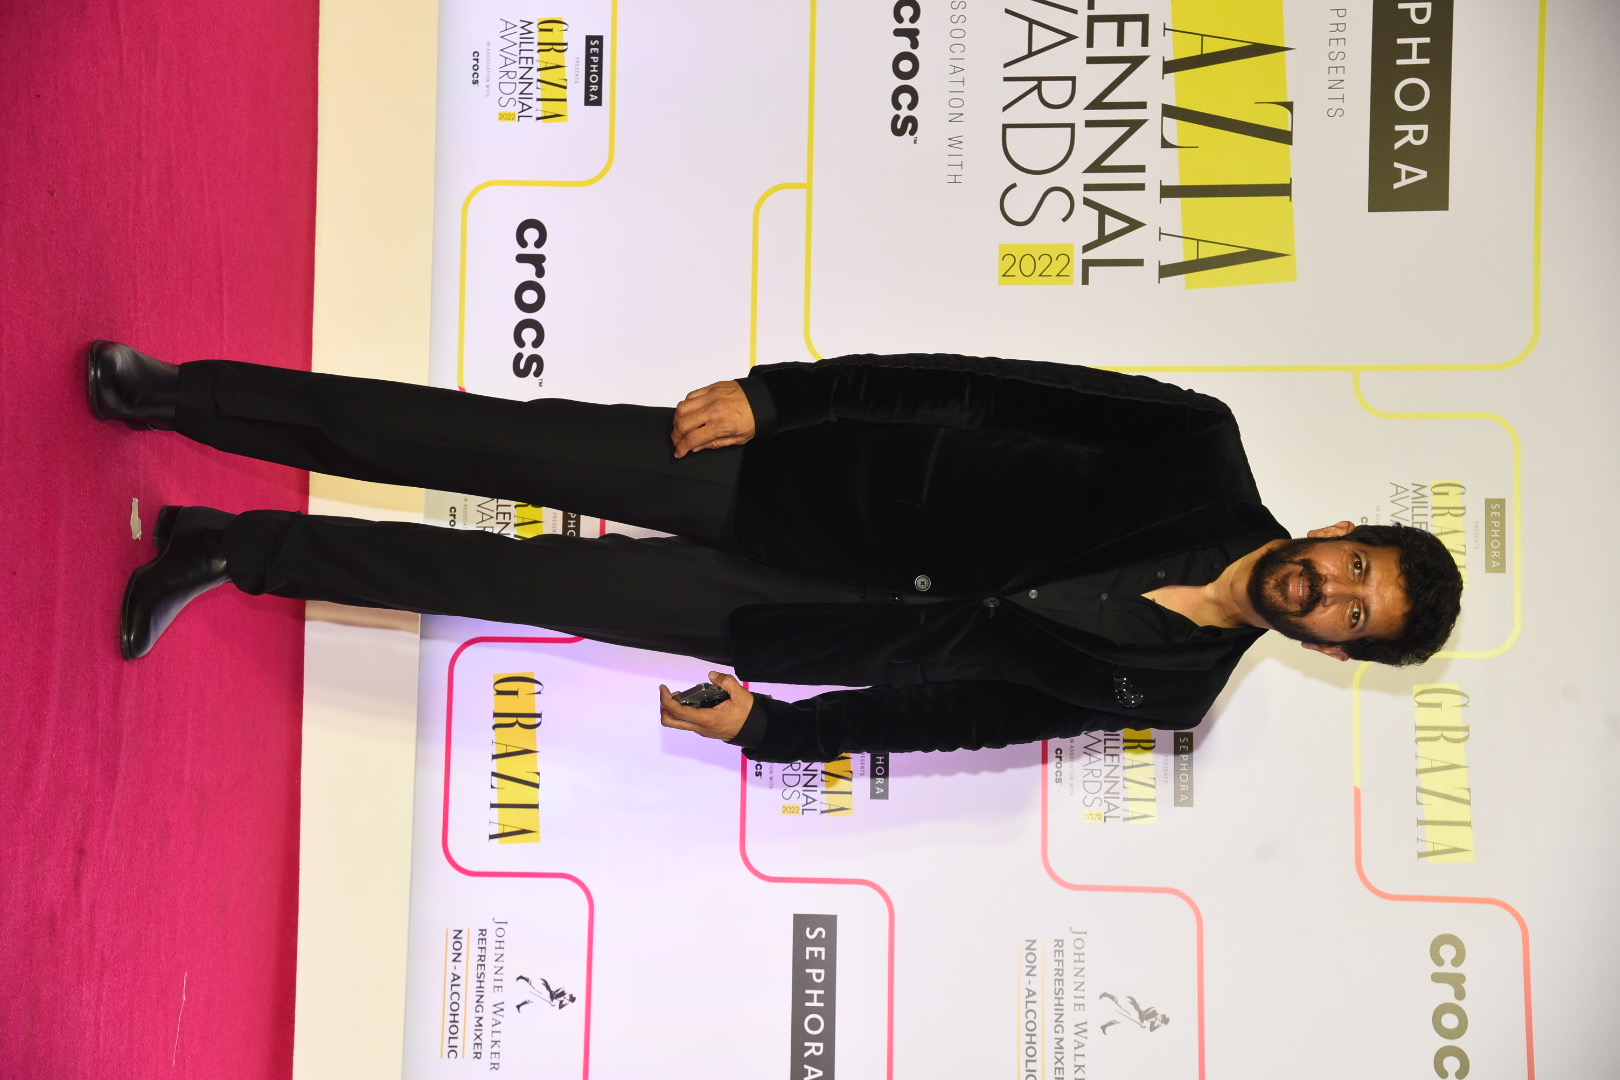 Kabir Khan makes an appearance at the awards